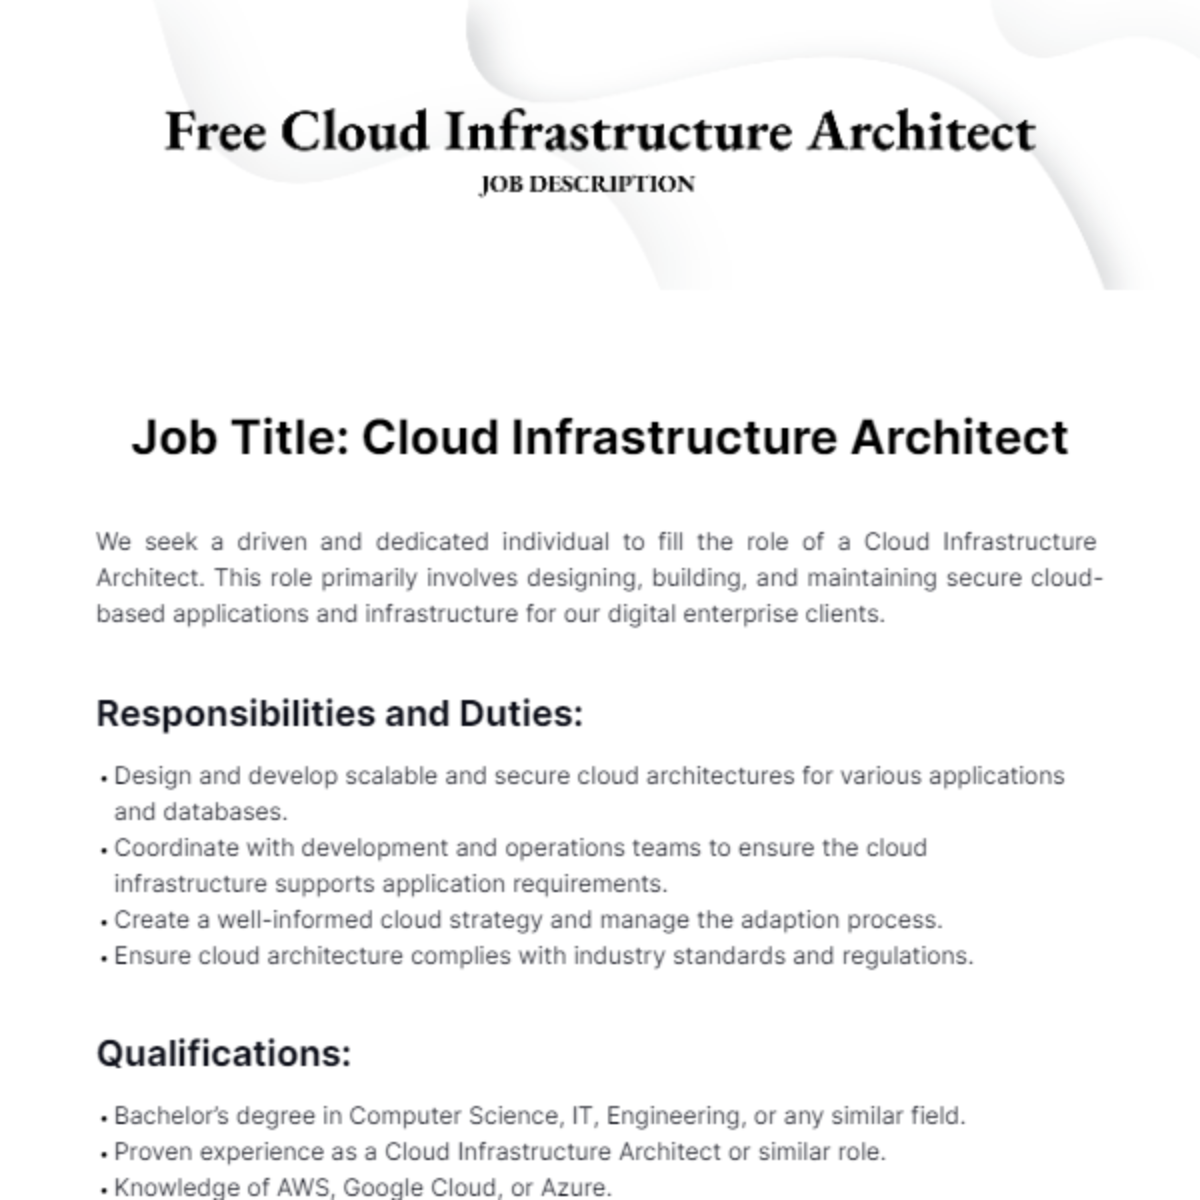 Free Cloud Infrastructure Architect Job Description Template